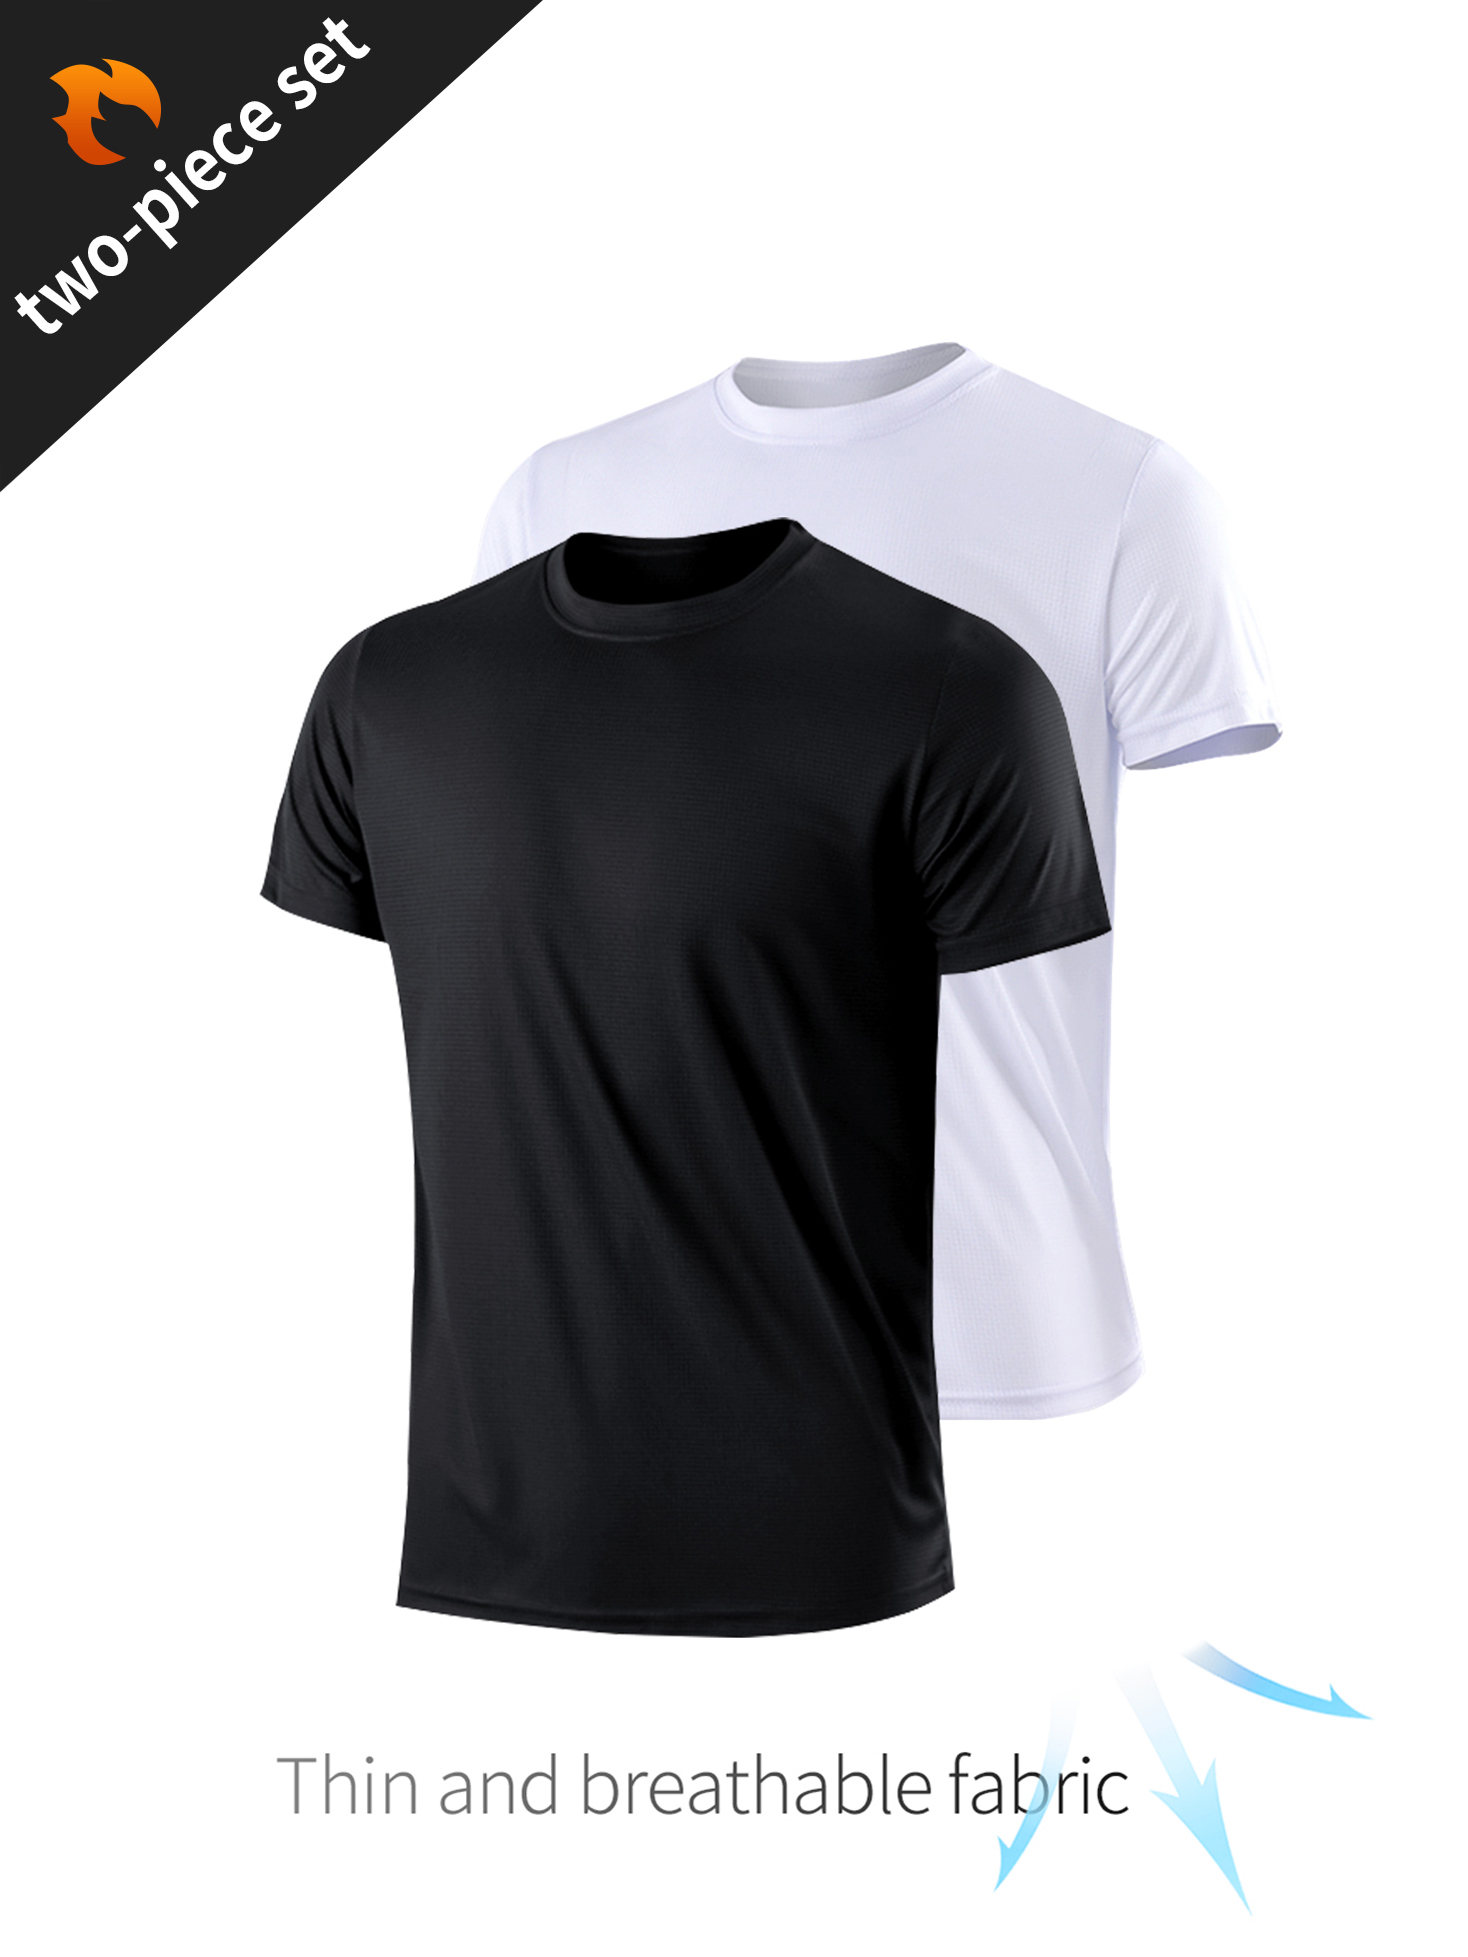 T-shirt Men Compression Quick Dry Sports Shirts Running Gym